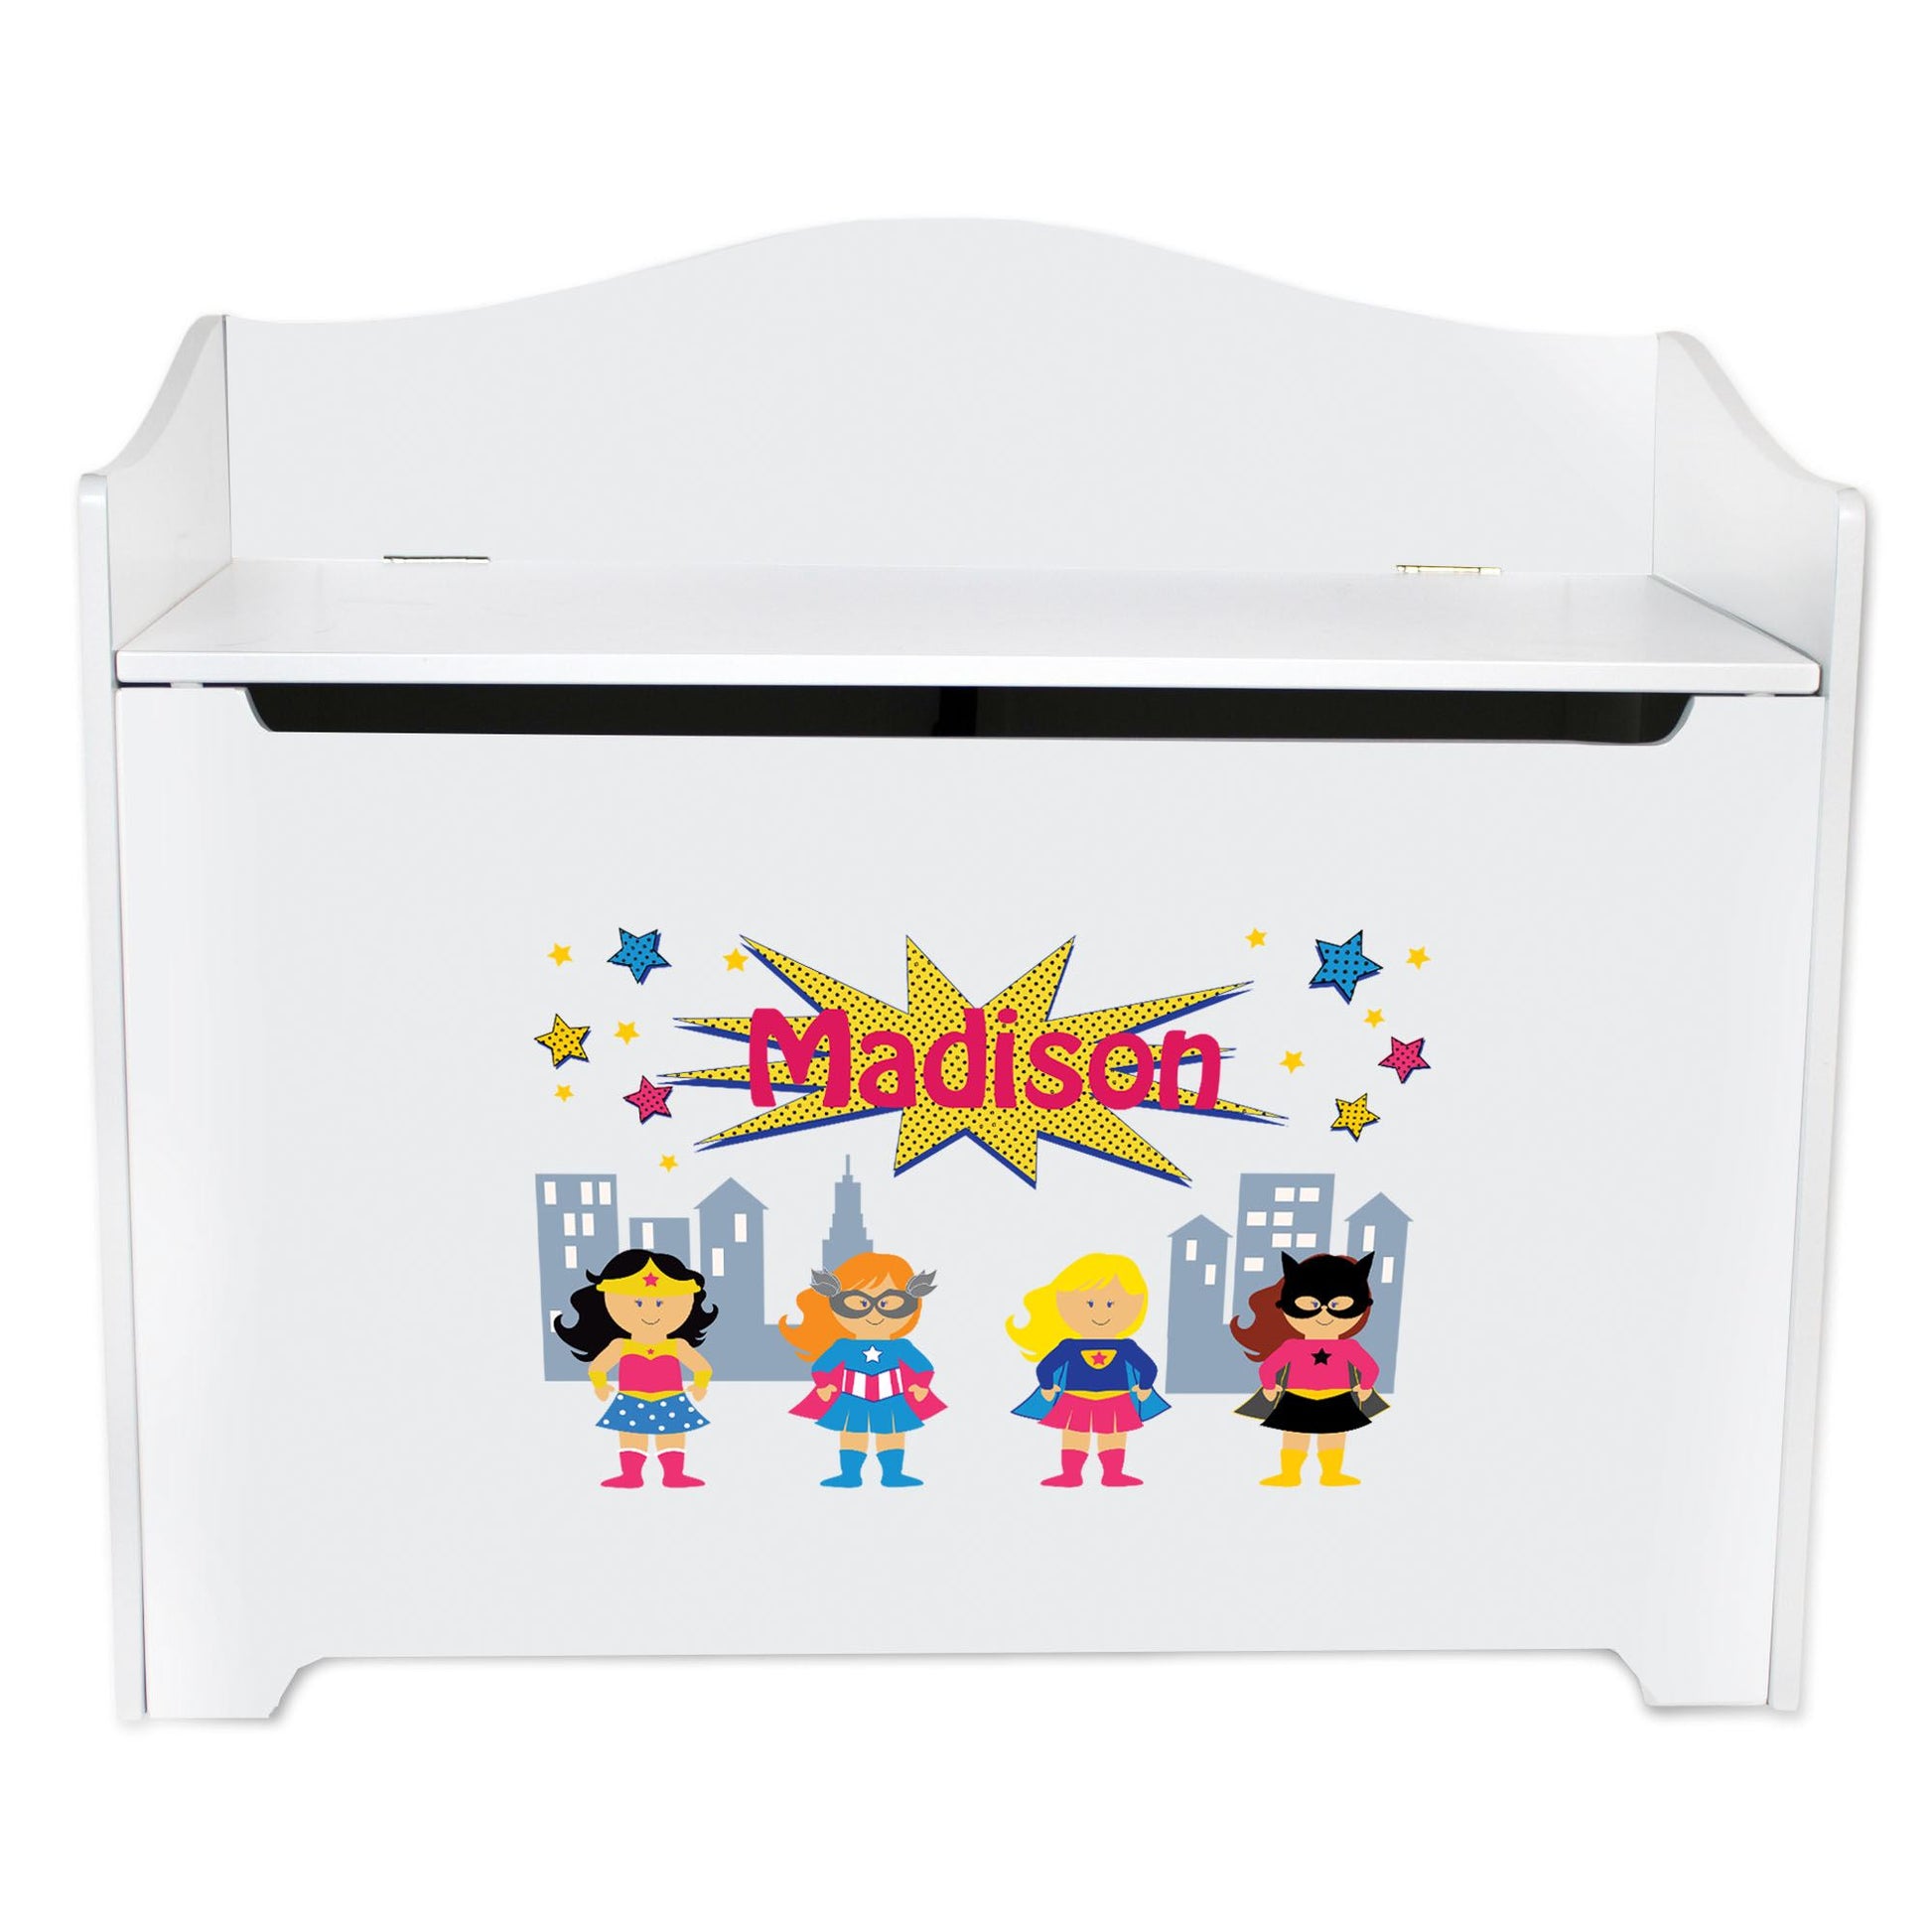 White Wooden Toy Box Bench with Super Girls design